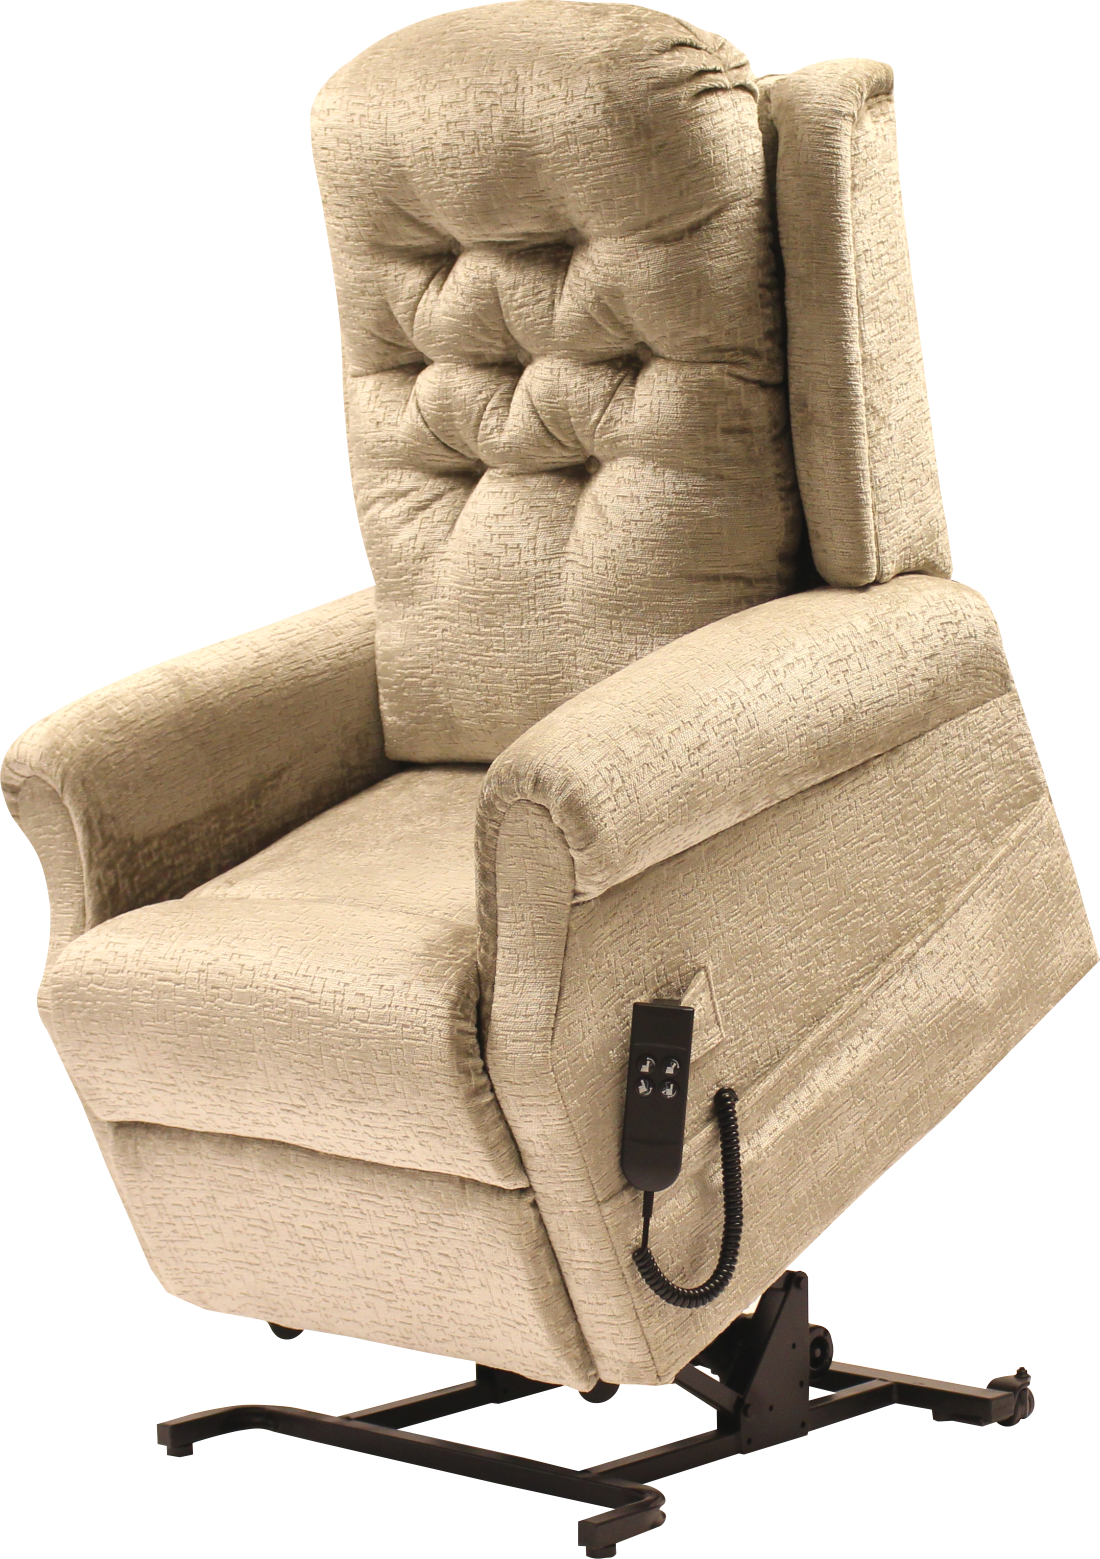 Buckholm Upholstered Lift & Rise Recliner Arm Chair Standard